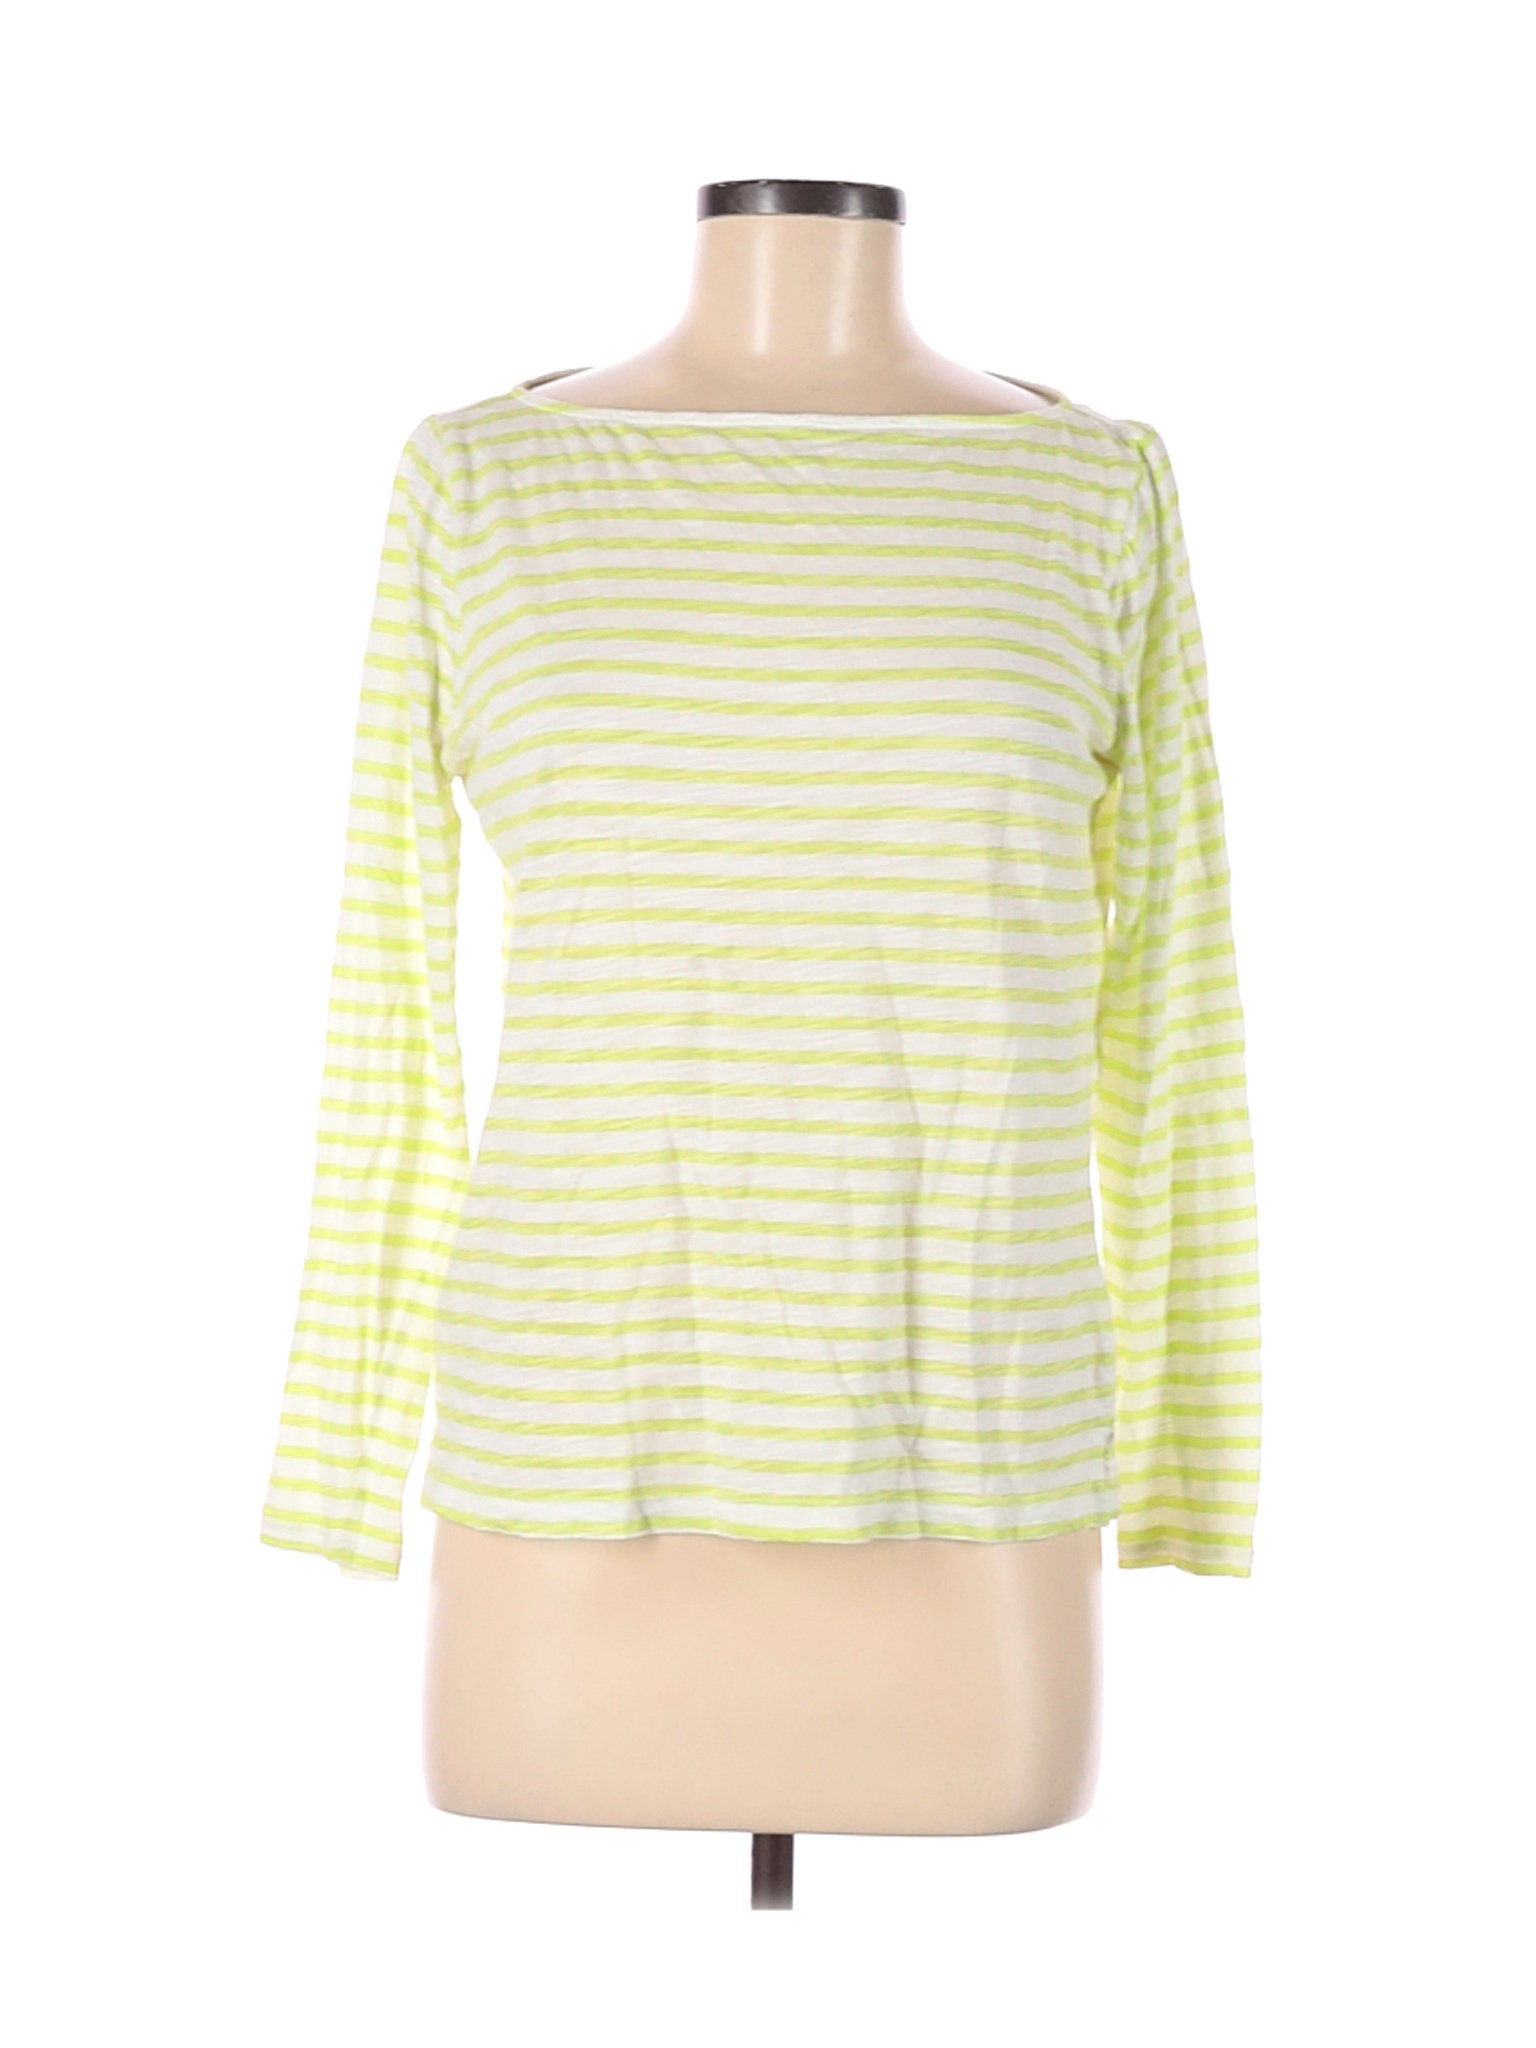 Joe Fresh Women Yellow Long Sleeve T-Shirt M | eBay